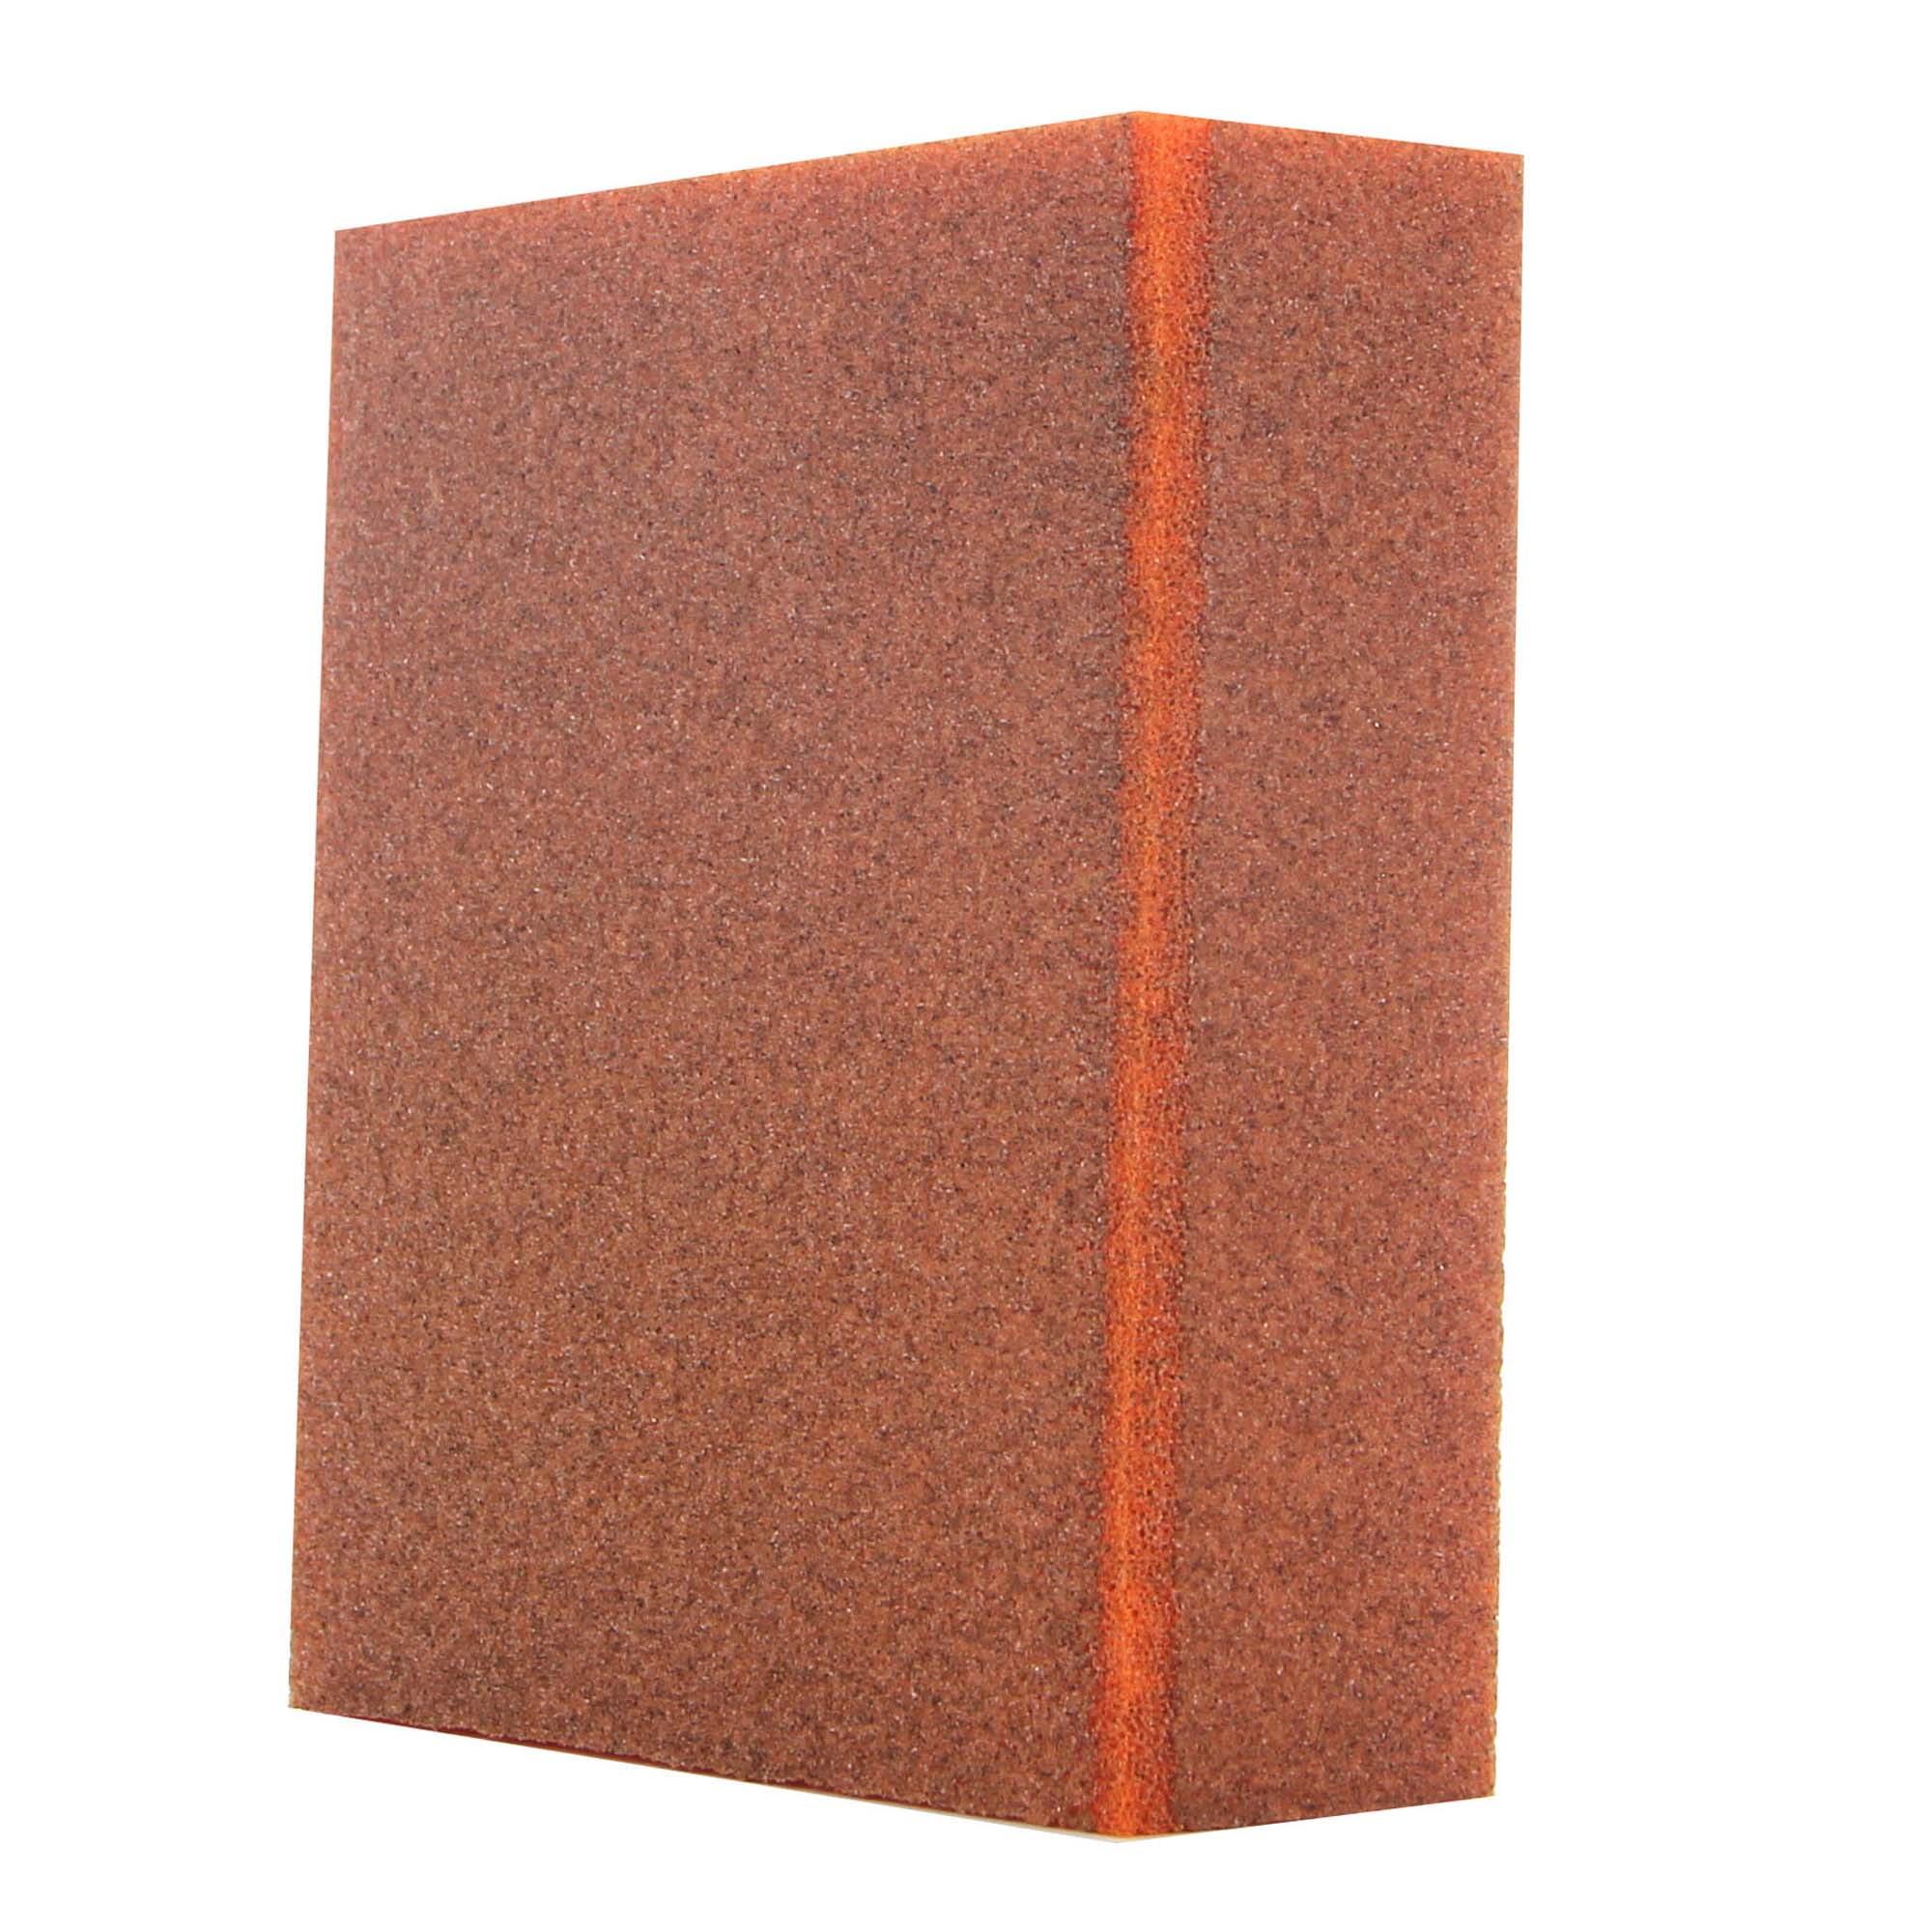 3x Sanding Girt Foam Nano Sponges Polishing Pad Furniture Buffer Sandpaper Block 